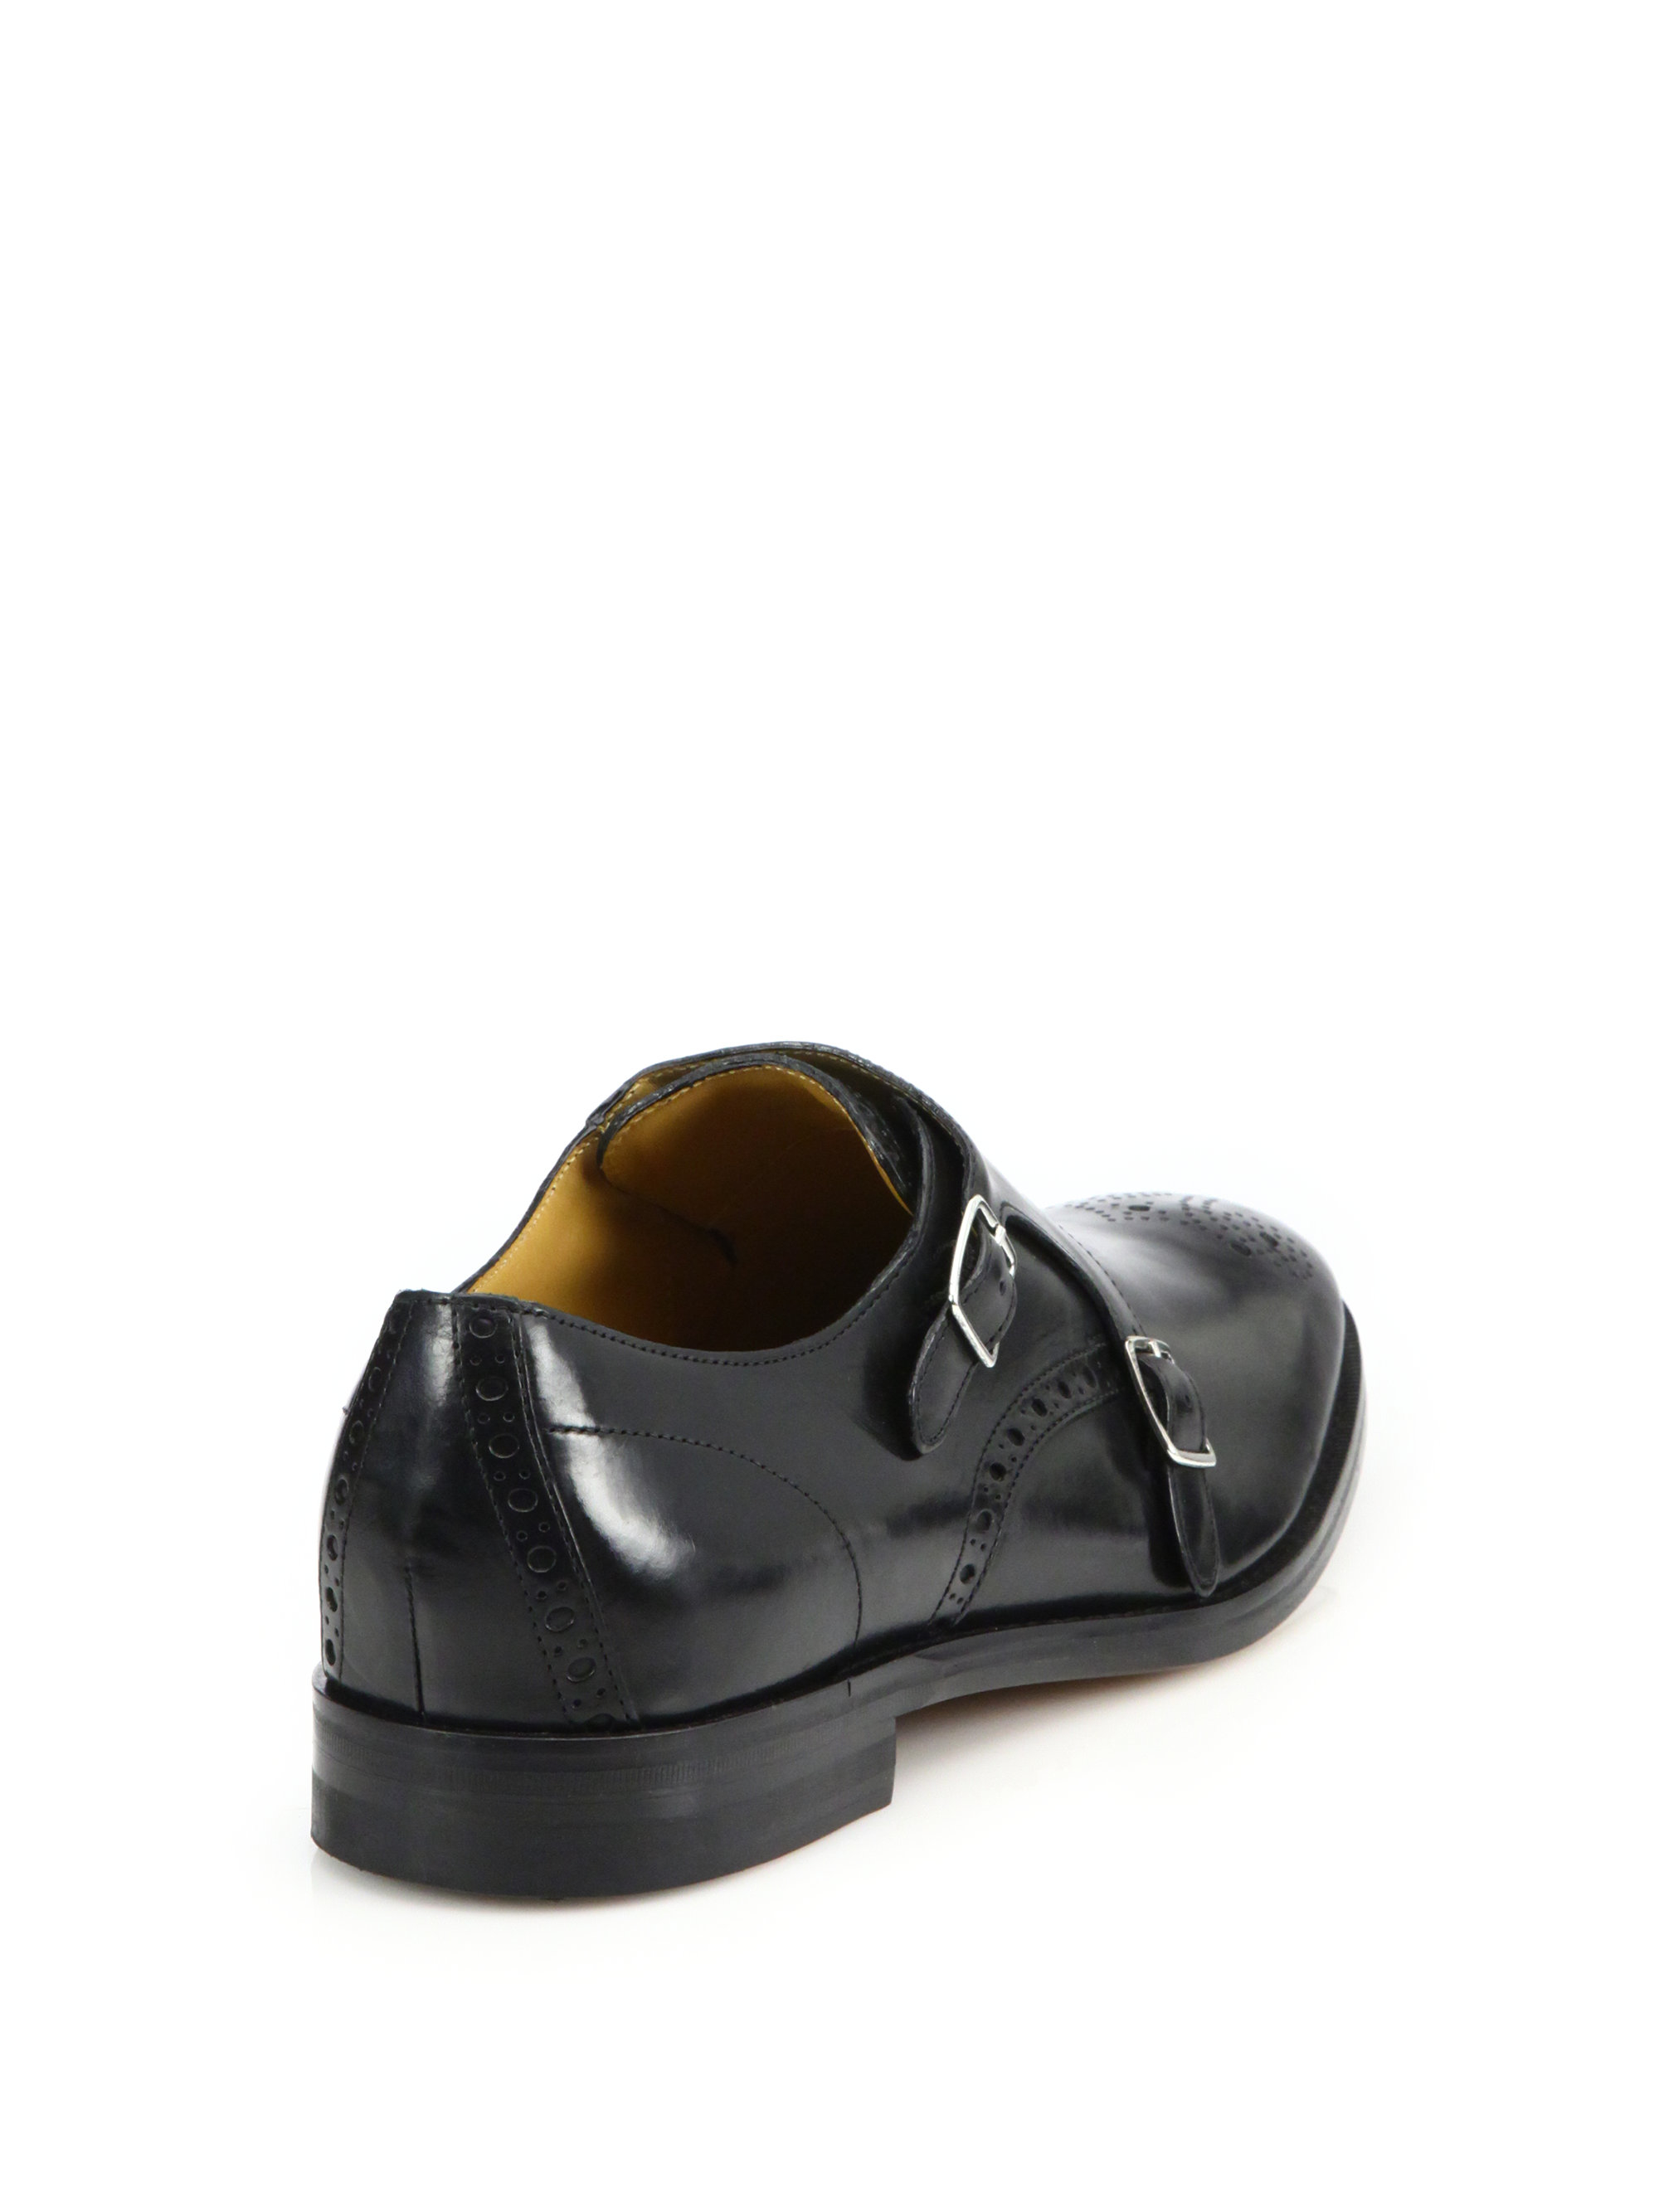 Lyst - Cole Haan Cambridge Double Monk-strap Shoes in Black for Men